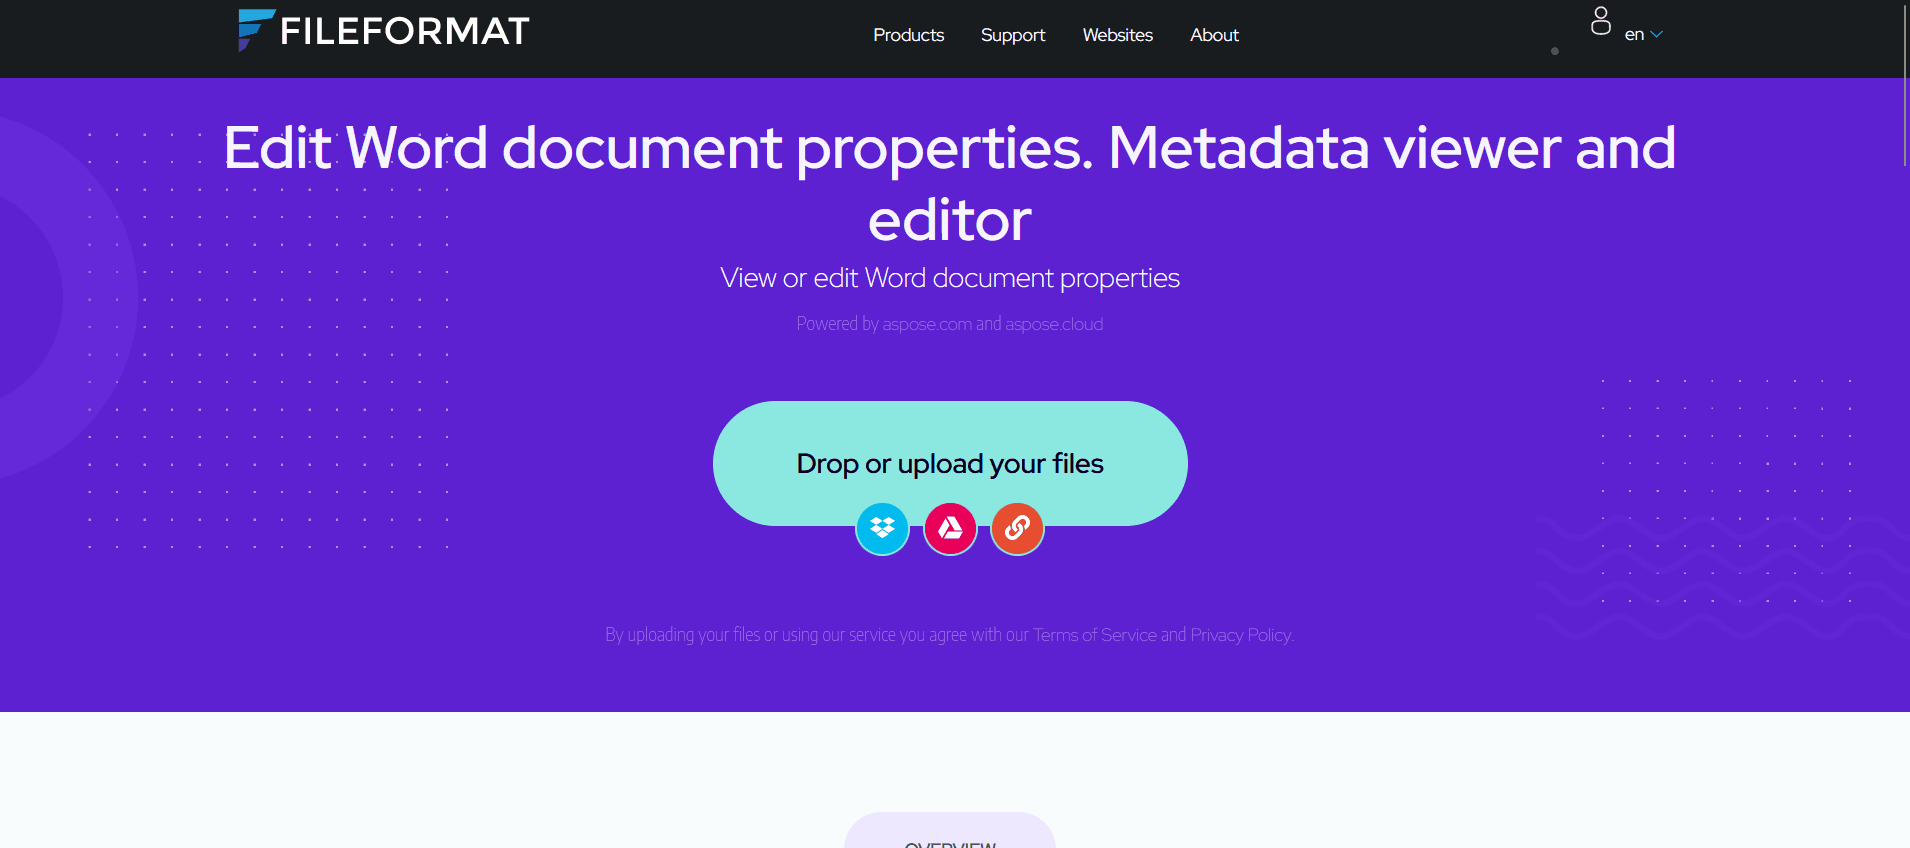 How to edit metadata online